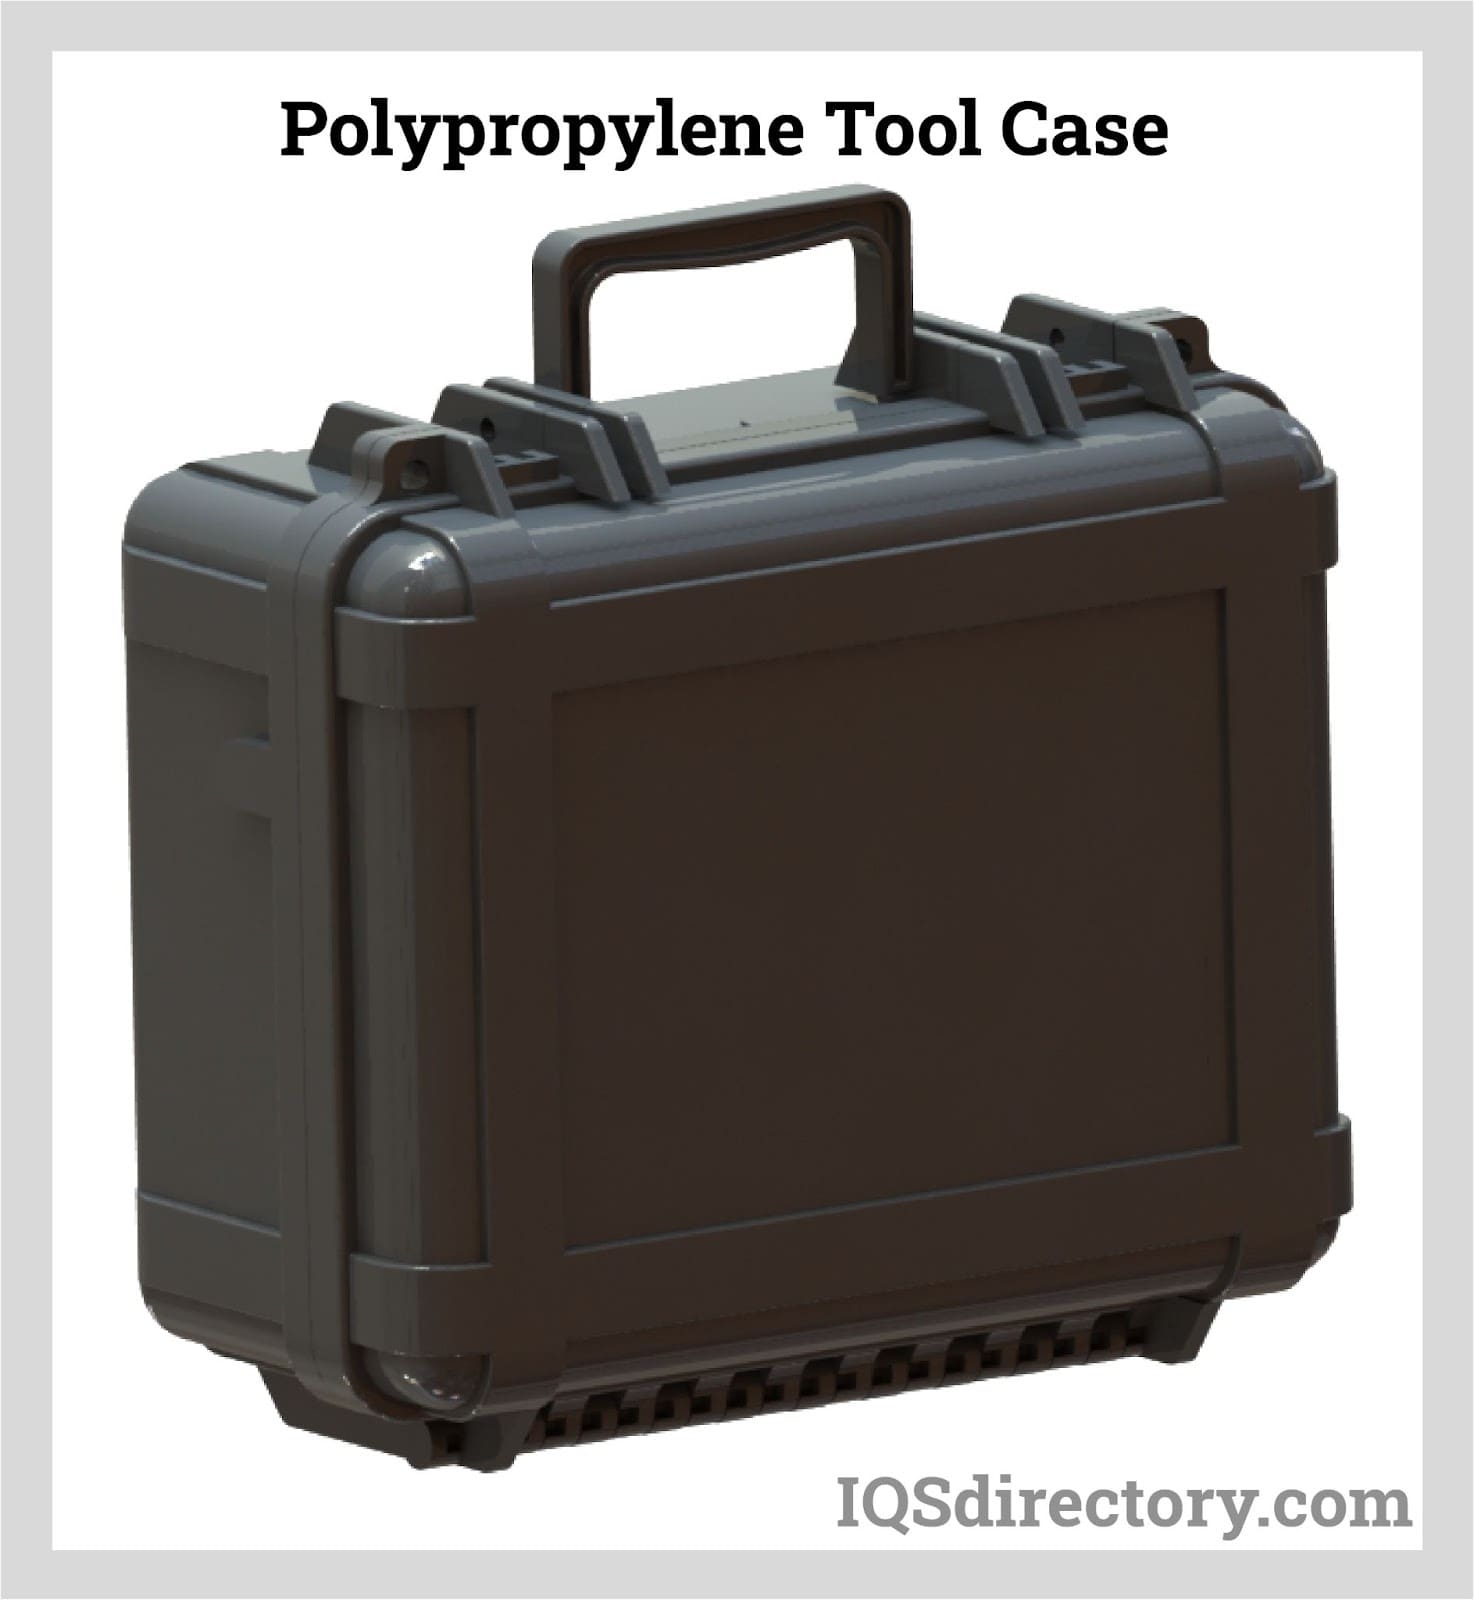 Polypropylene Tool Case